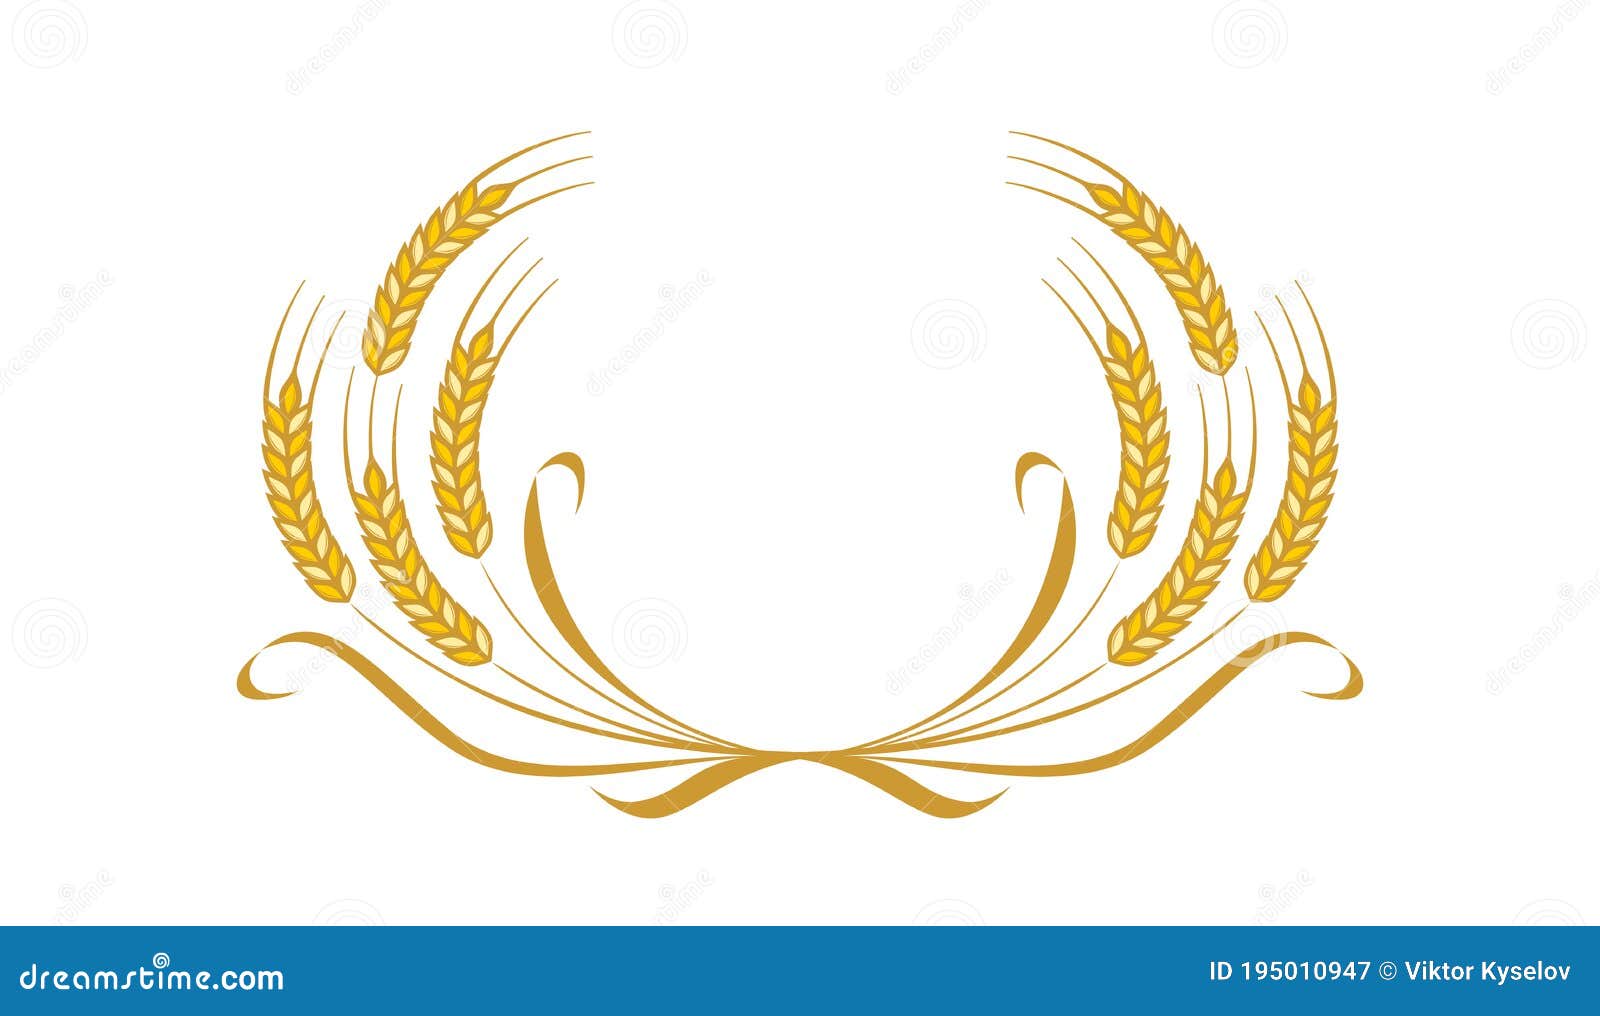 wheat logo frame